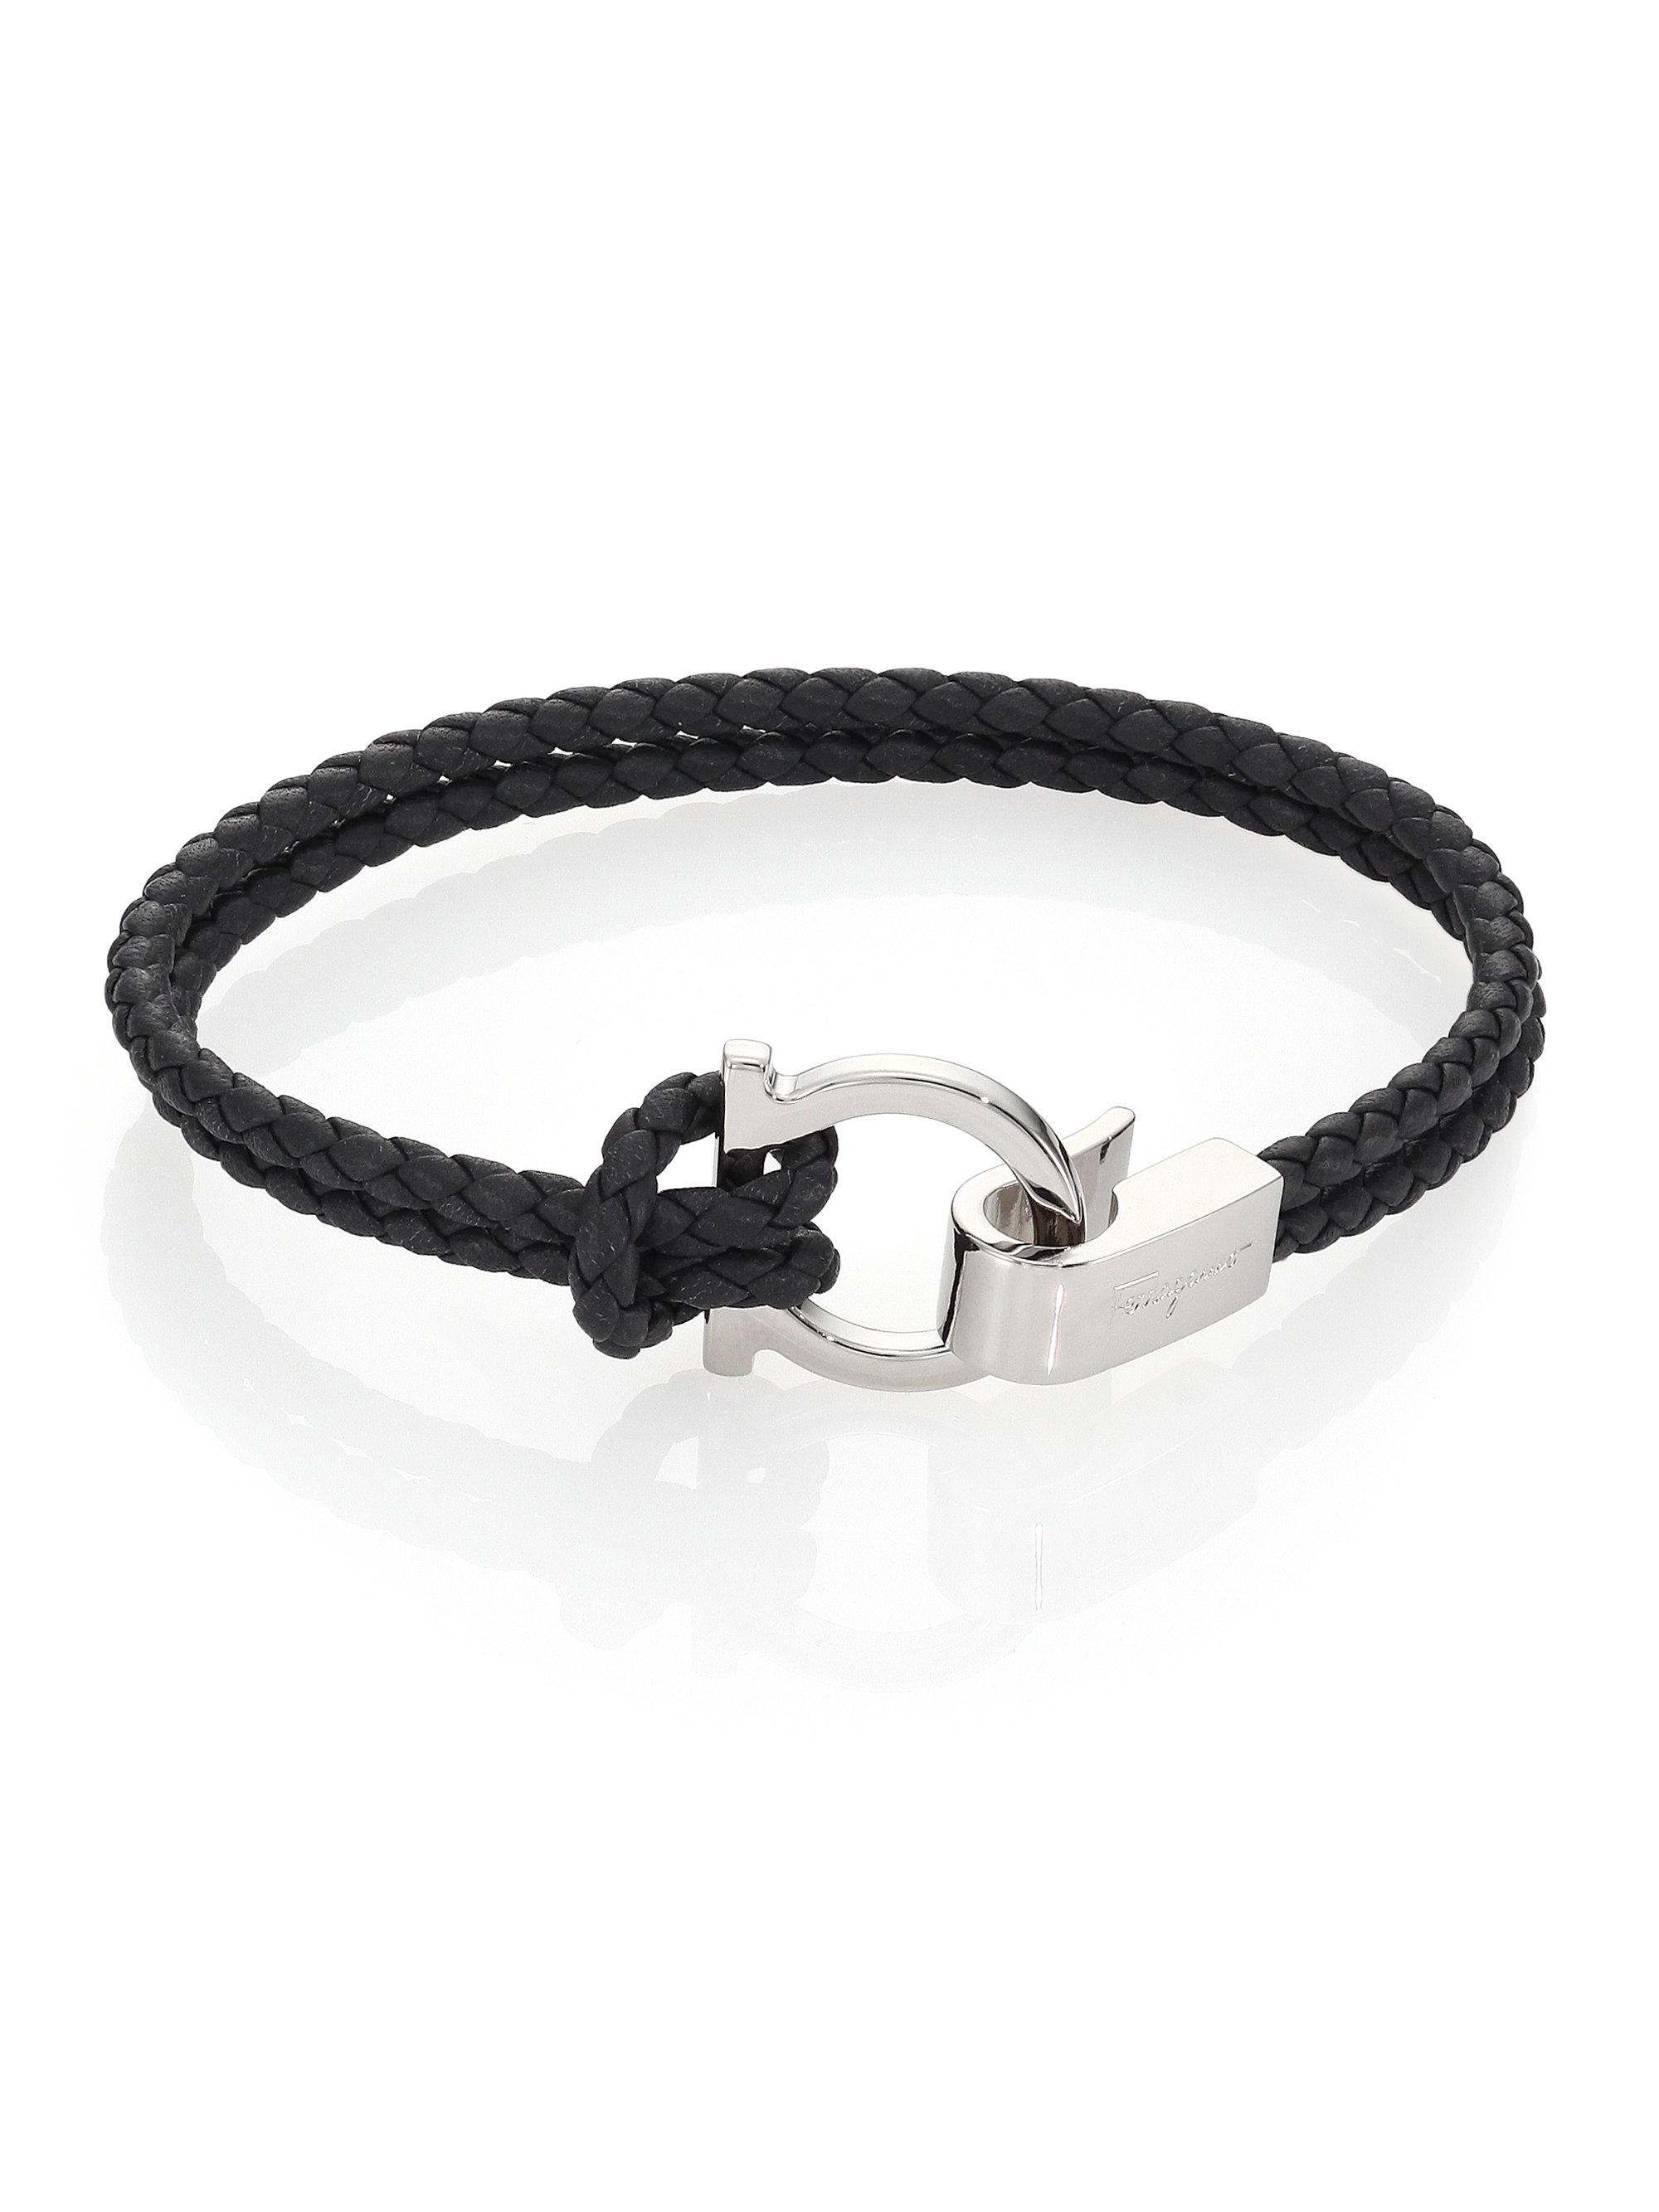 Ferragamo Braided Leather Bracelet in Dark Grey (Gray) for Men - Lyst